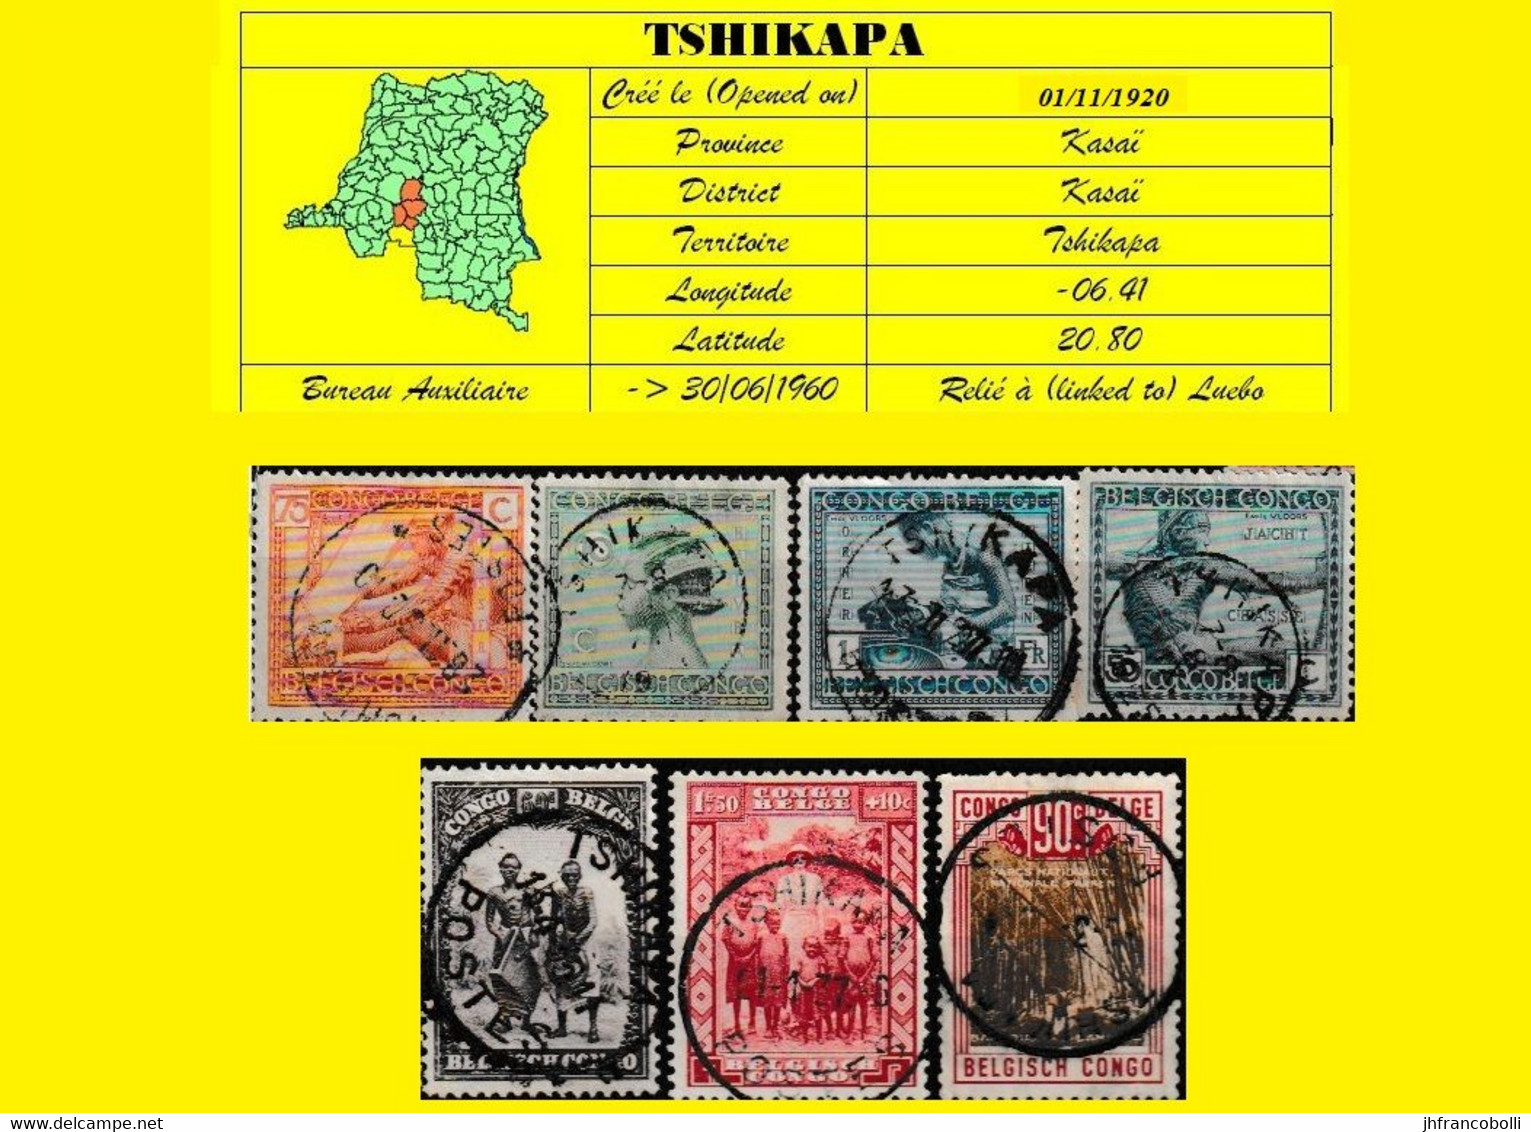 TSHIKAPA BELGIAN CONGO / CONGO BELGE =  CANCELATION STUDY X 7 STAMPS 1923/1941 PERIOD [G] - Variedades Y Curiosidades